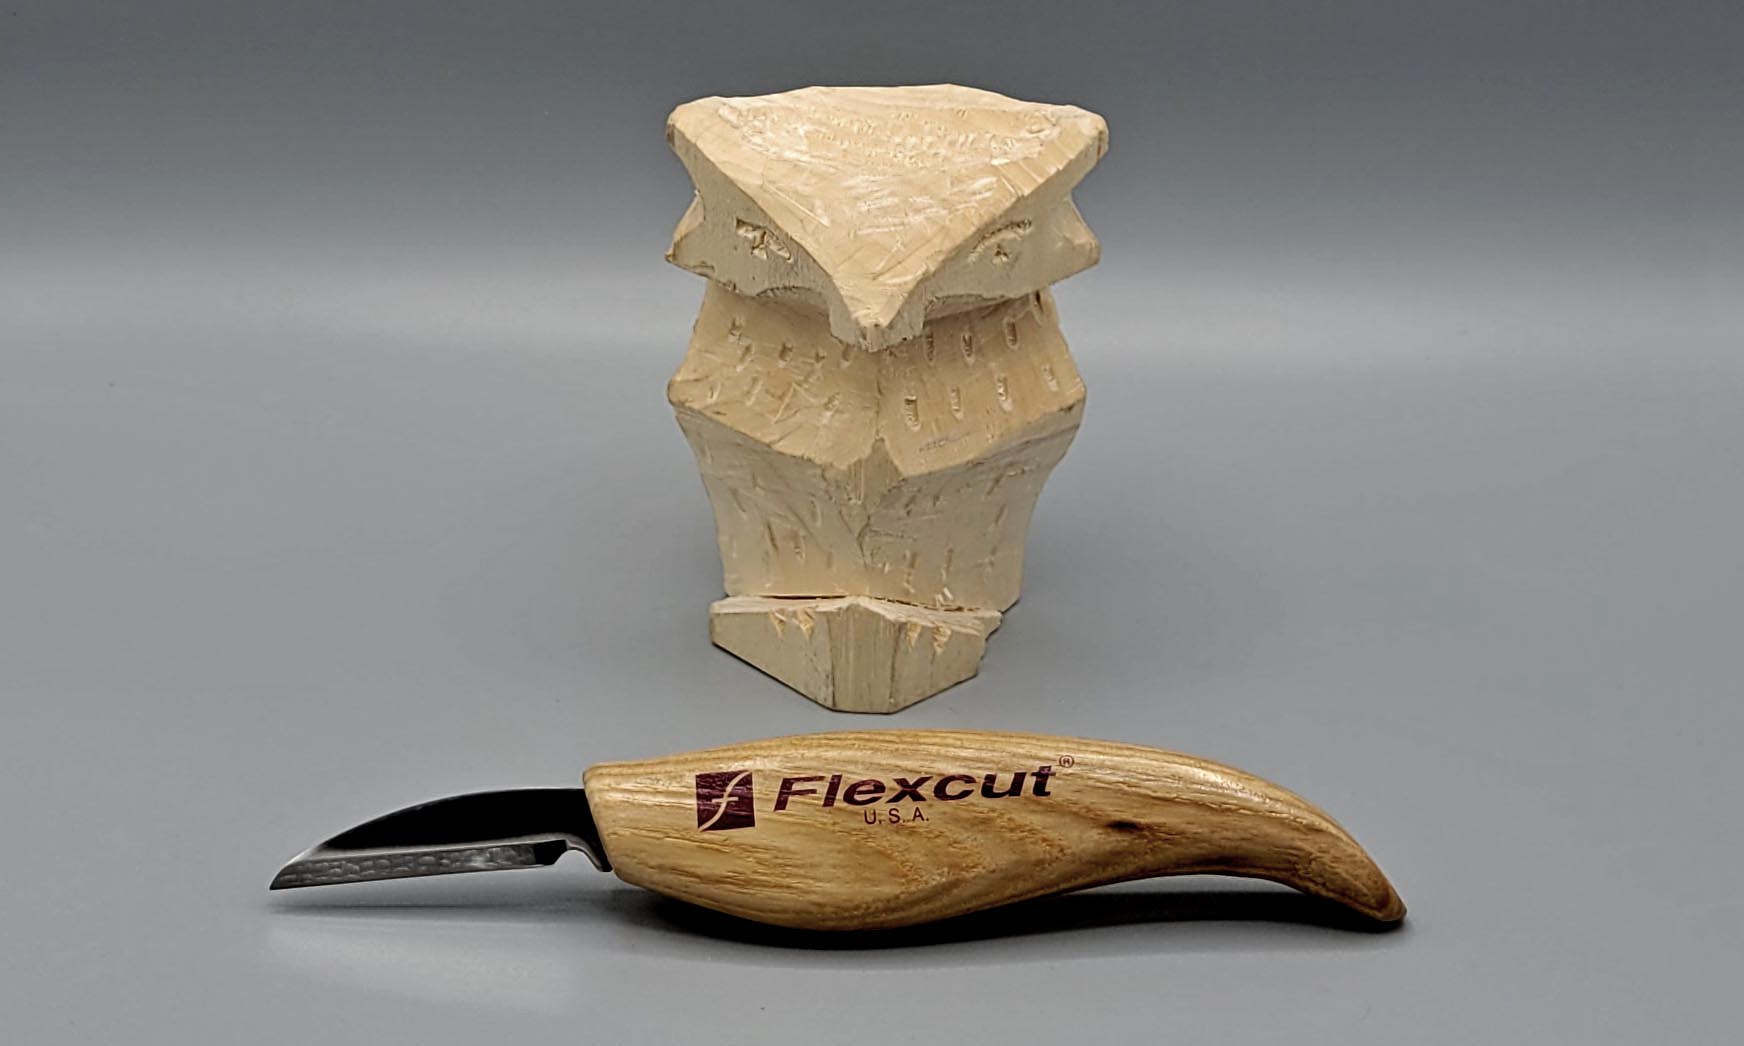 Flexcut 3-Knife Carving Starter Set